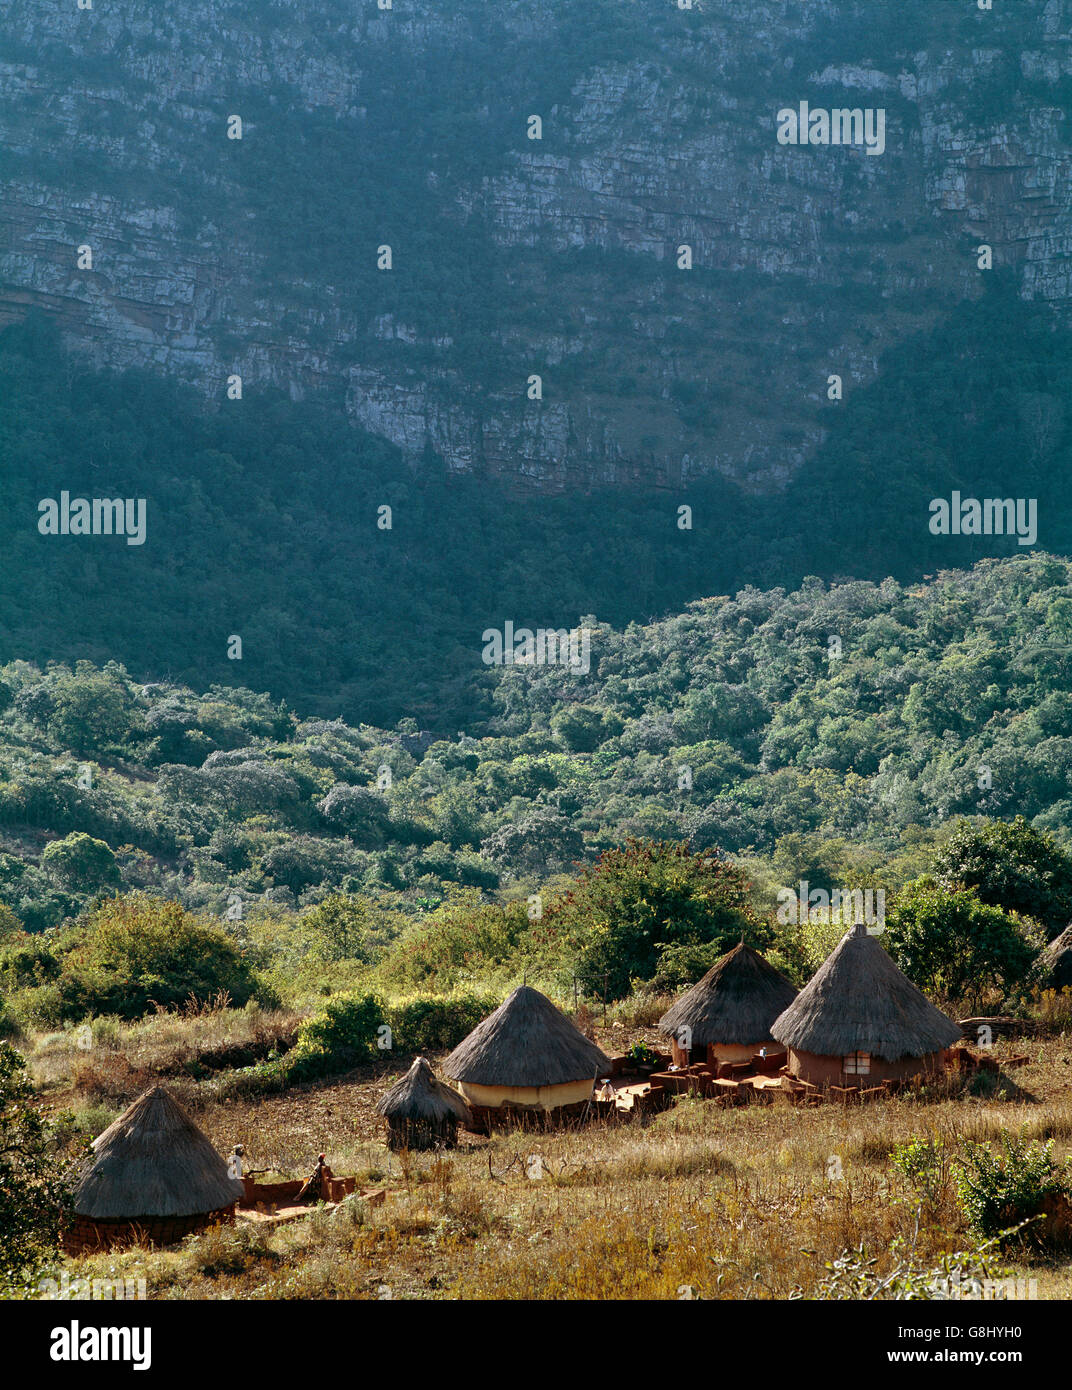 Rural Venda huts, Fundudsi, Limpopo, South Africa. Stock Photo